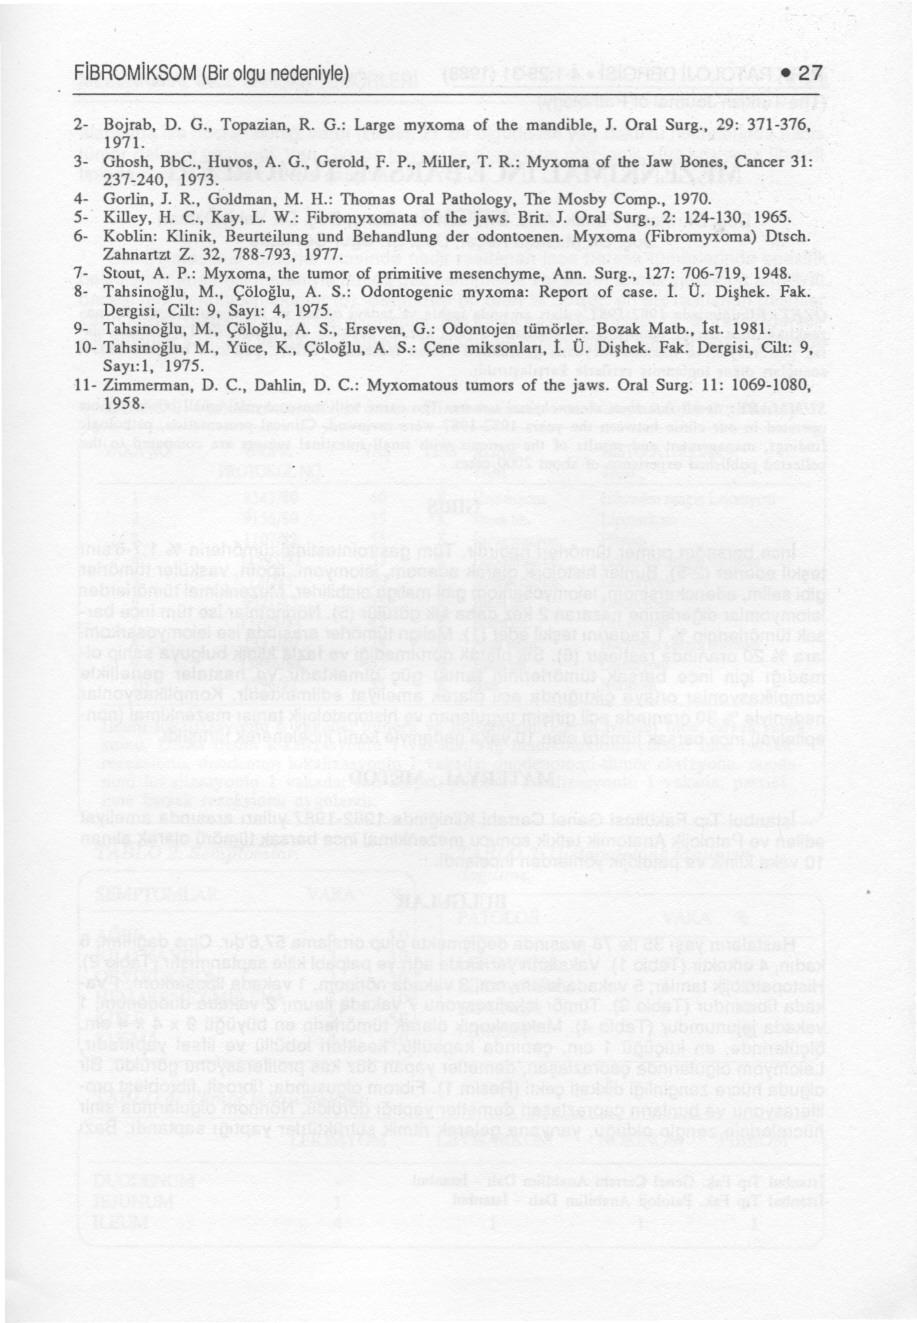 FIBROM1KSOM (Bir olgu nedeniyle) 27 2- Bojrab, D. G., Topazian, R. G.: Large myxoma of the mandible, J. Oral Surg., 29: 371-376, 1971. 3- Ghosh, BbC., Huyos, A. G., Gerold, F. P., Miller, T. R.: Myxoma of the Jaw Bones, Cancer 31: 237-240, 1973.